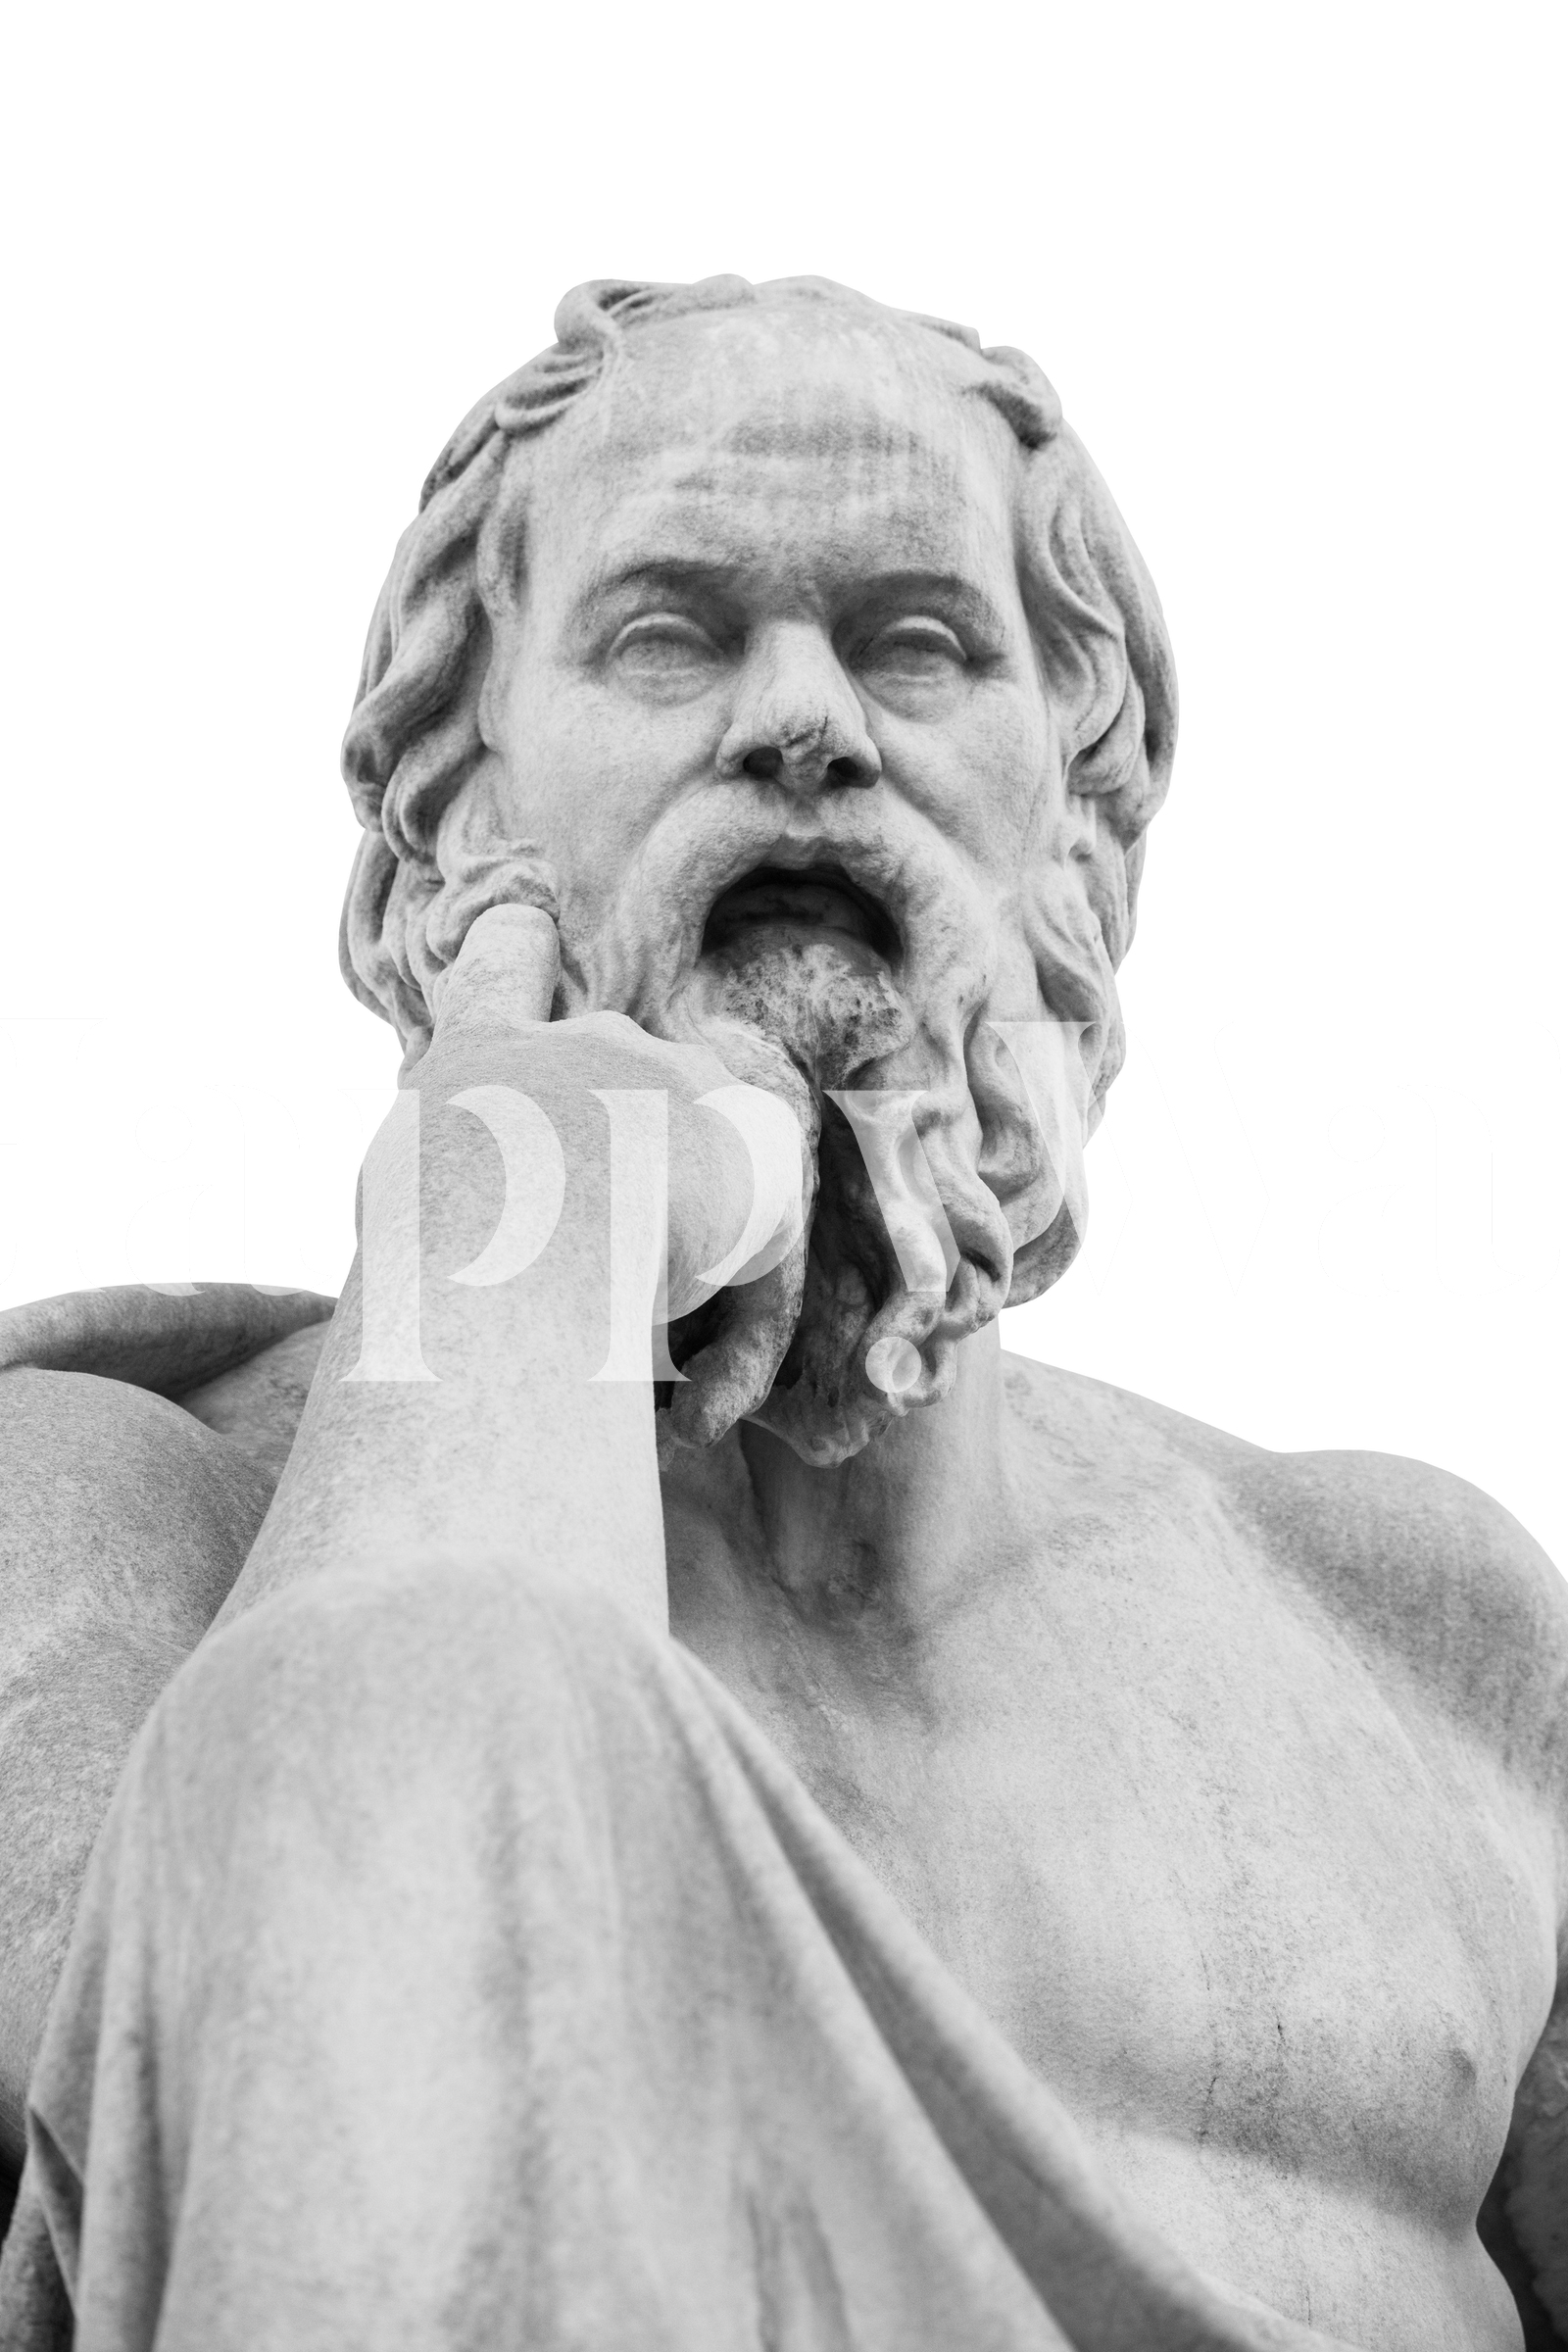 750 Socrates Stock Photos Pictures  RoyaltyFree Images  iStock   Socrates statue Aristotle Plato